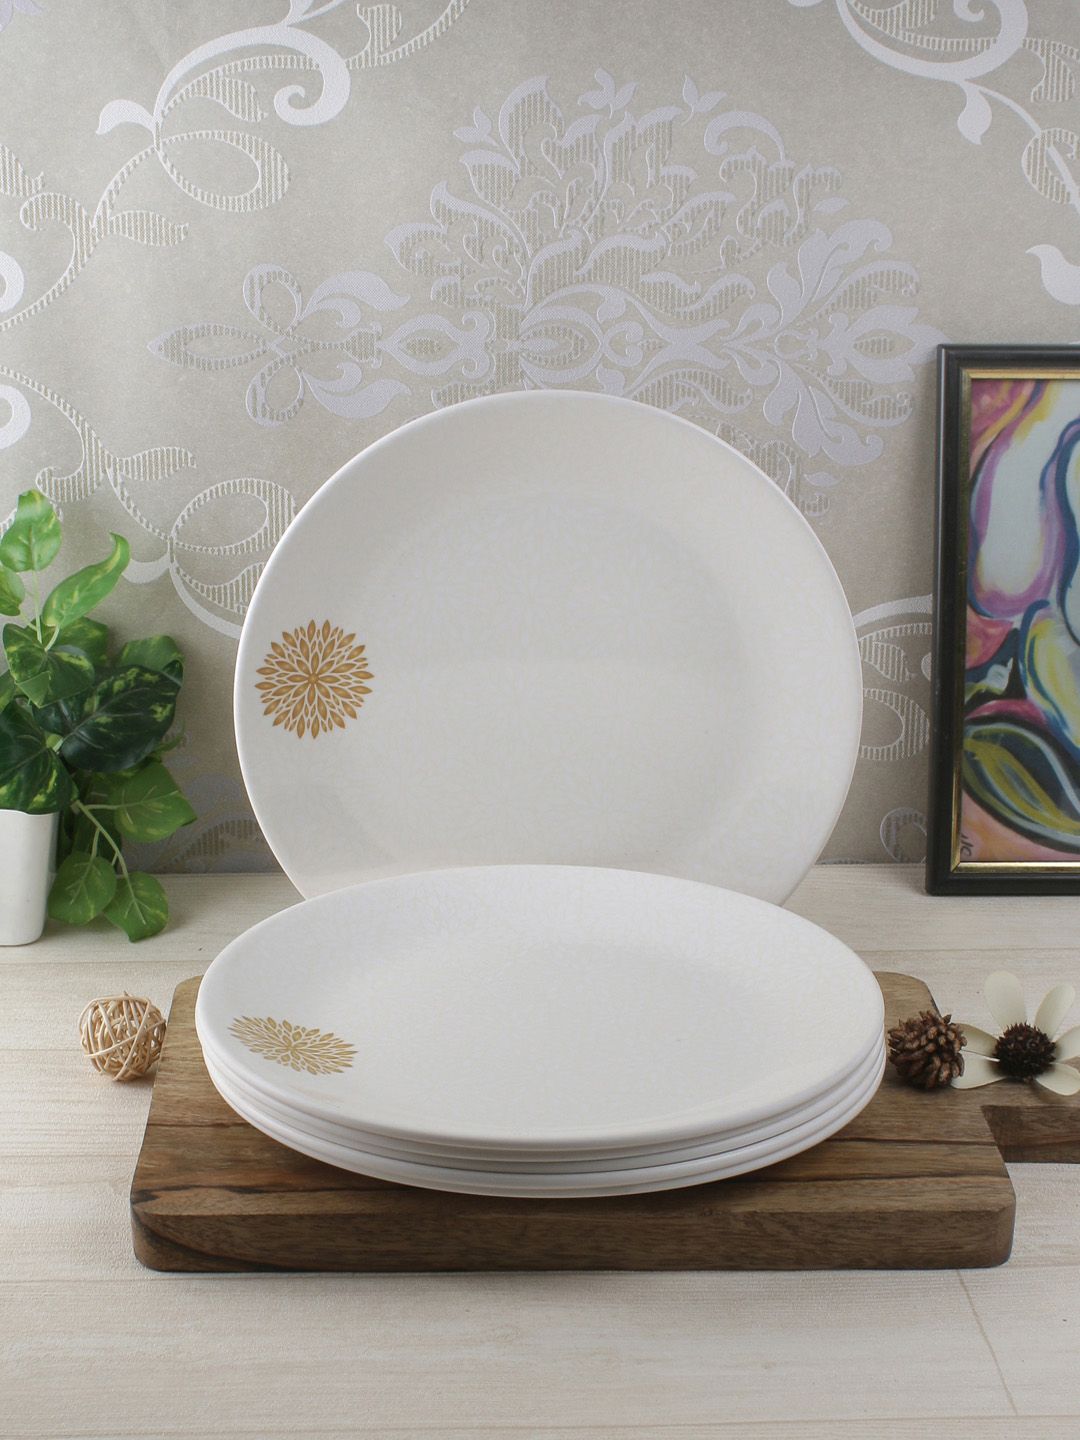 Servewell White 6-Pieces Textured Melamine Plates Set Price in India